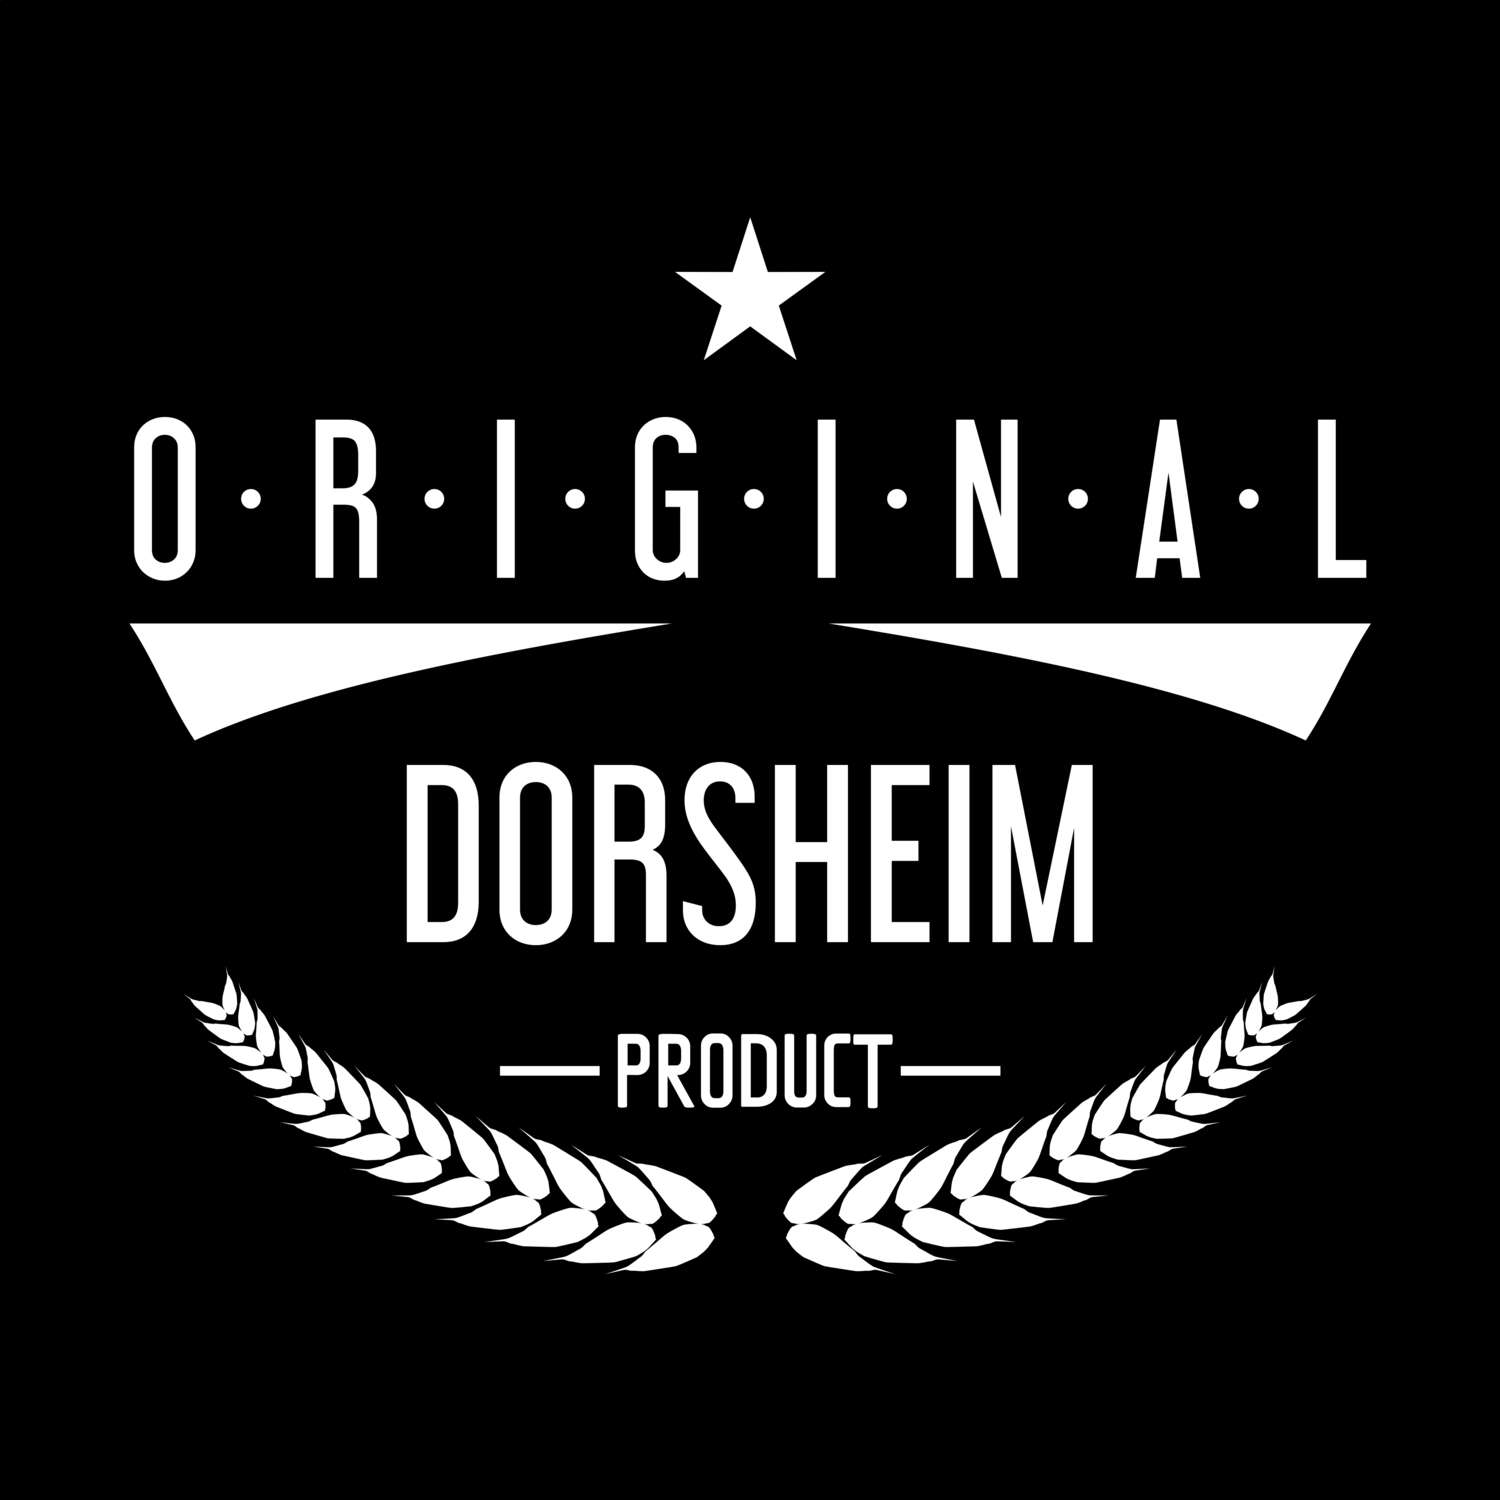 Dorsheim T-Shirt »Original Product«